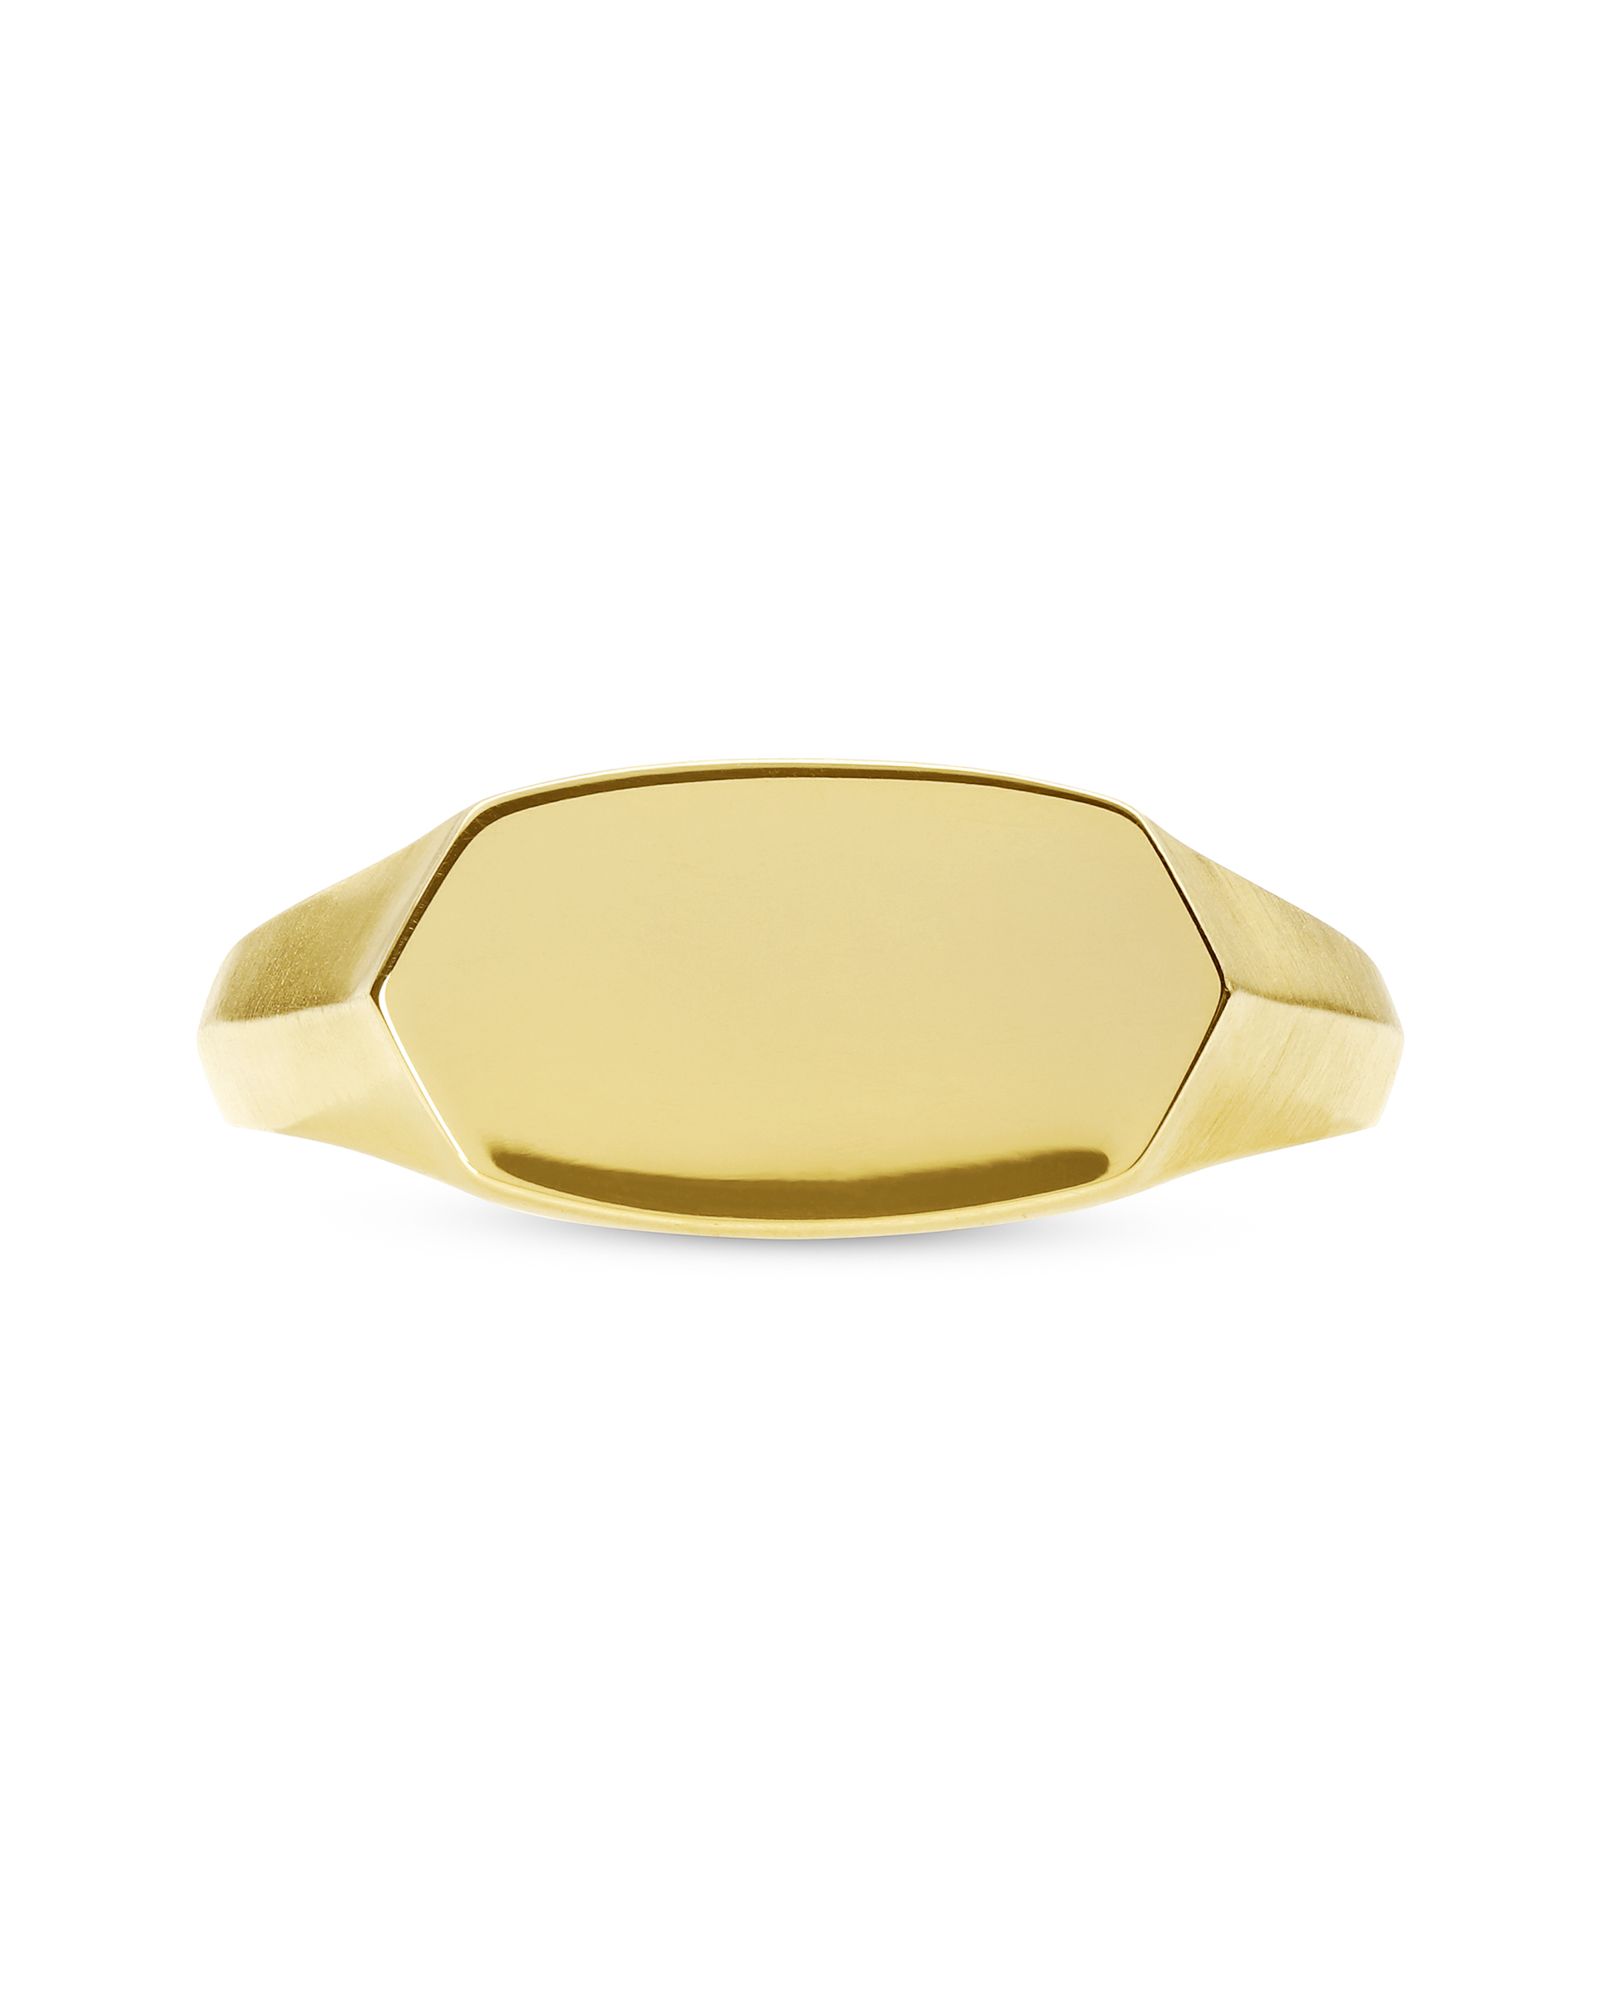 Elisa Signet Ring in 18k Gold Vermeil - 8 | Kendra Scott | Kendra Scott